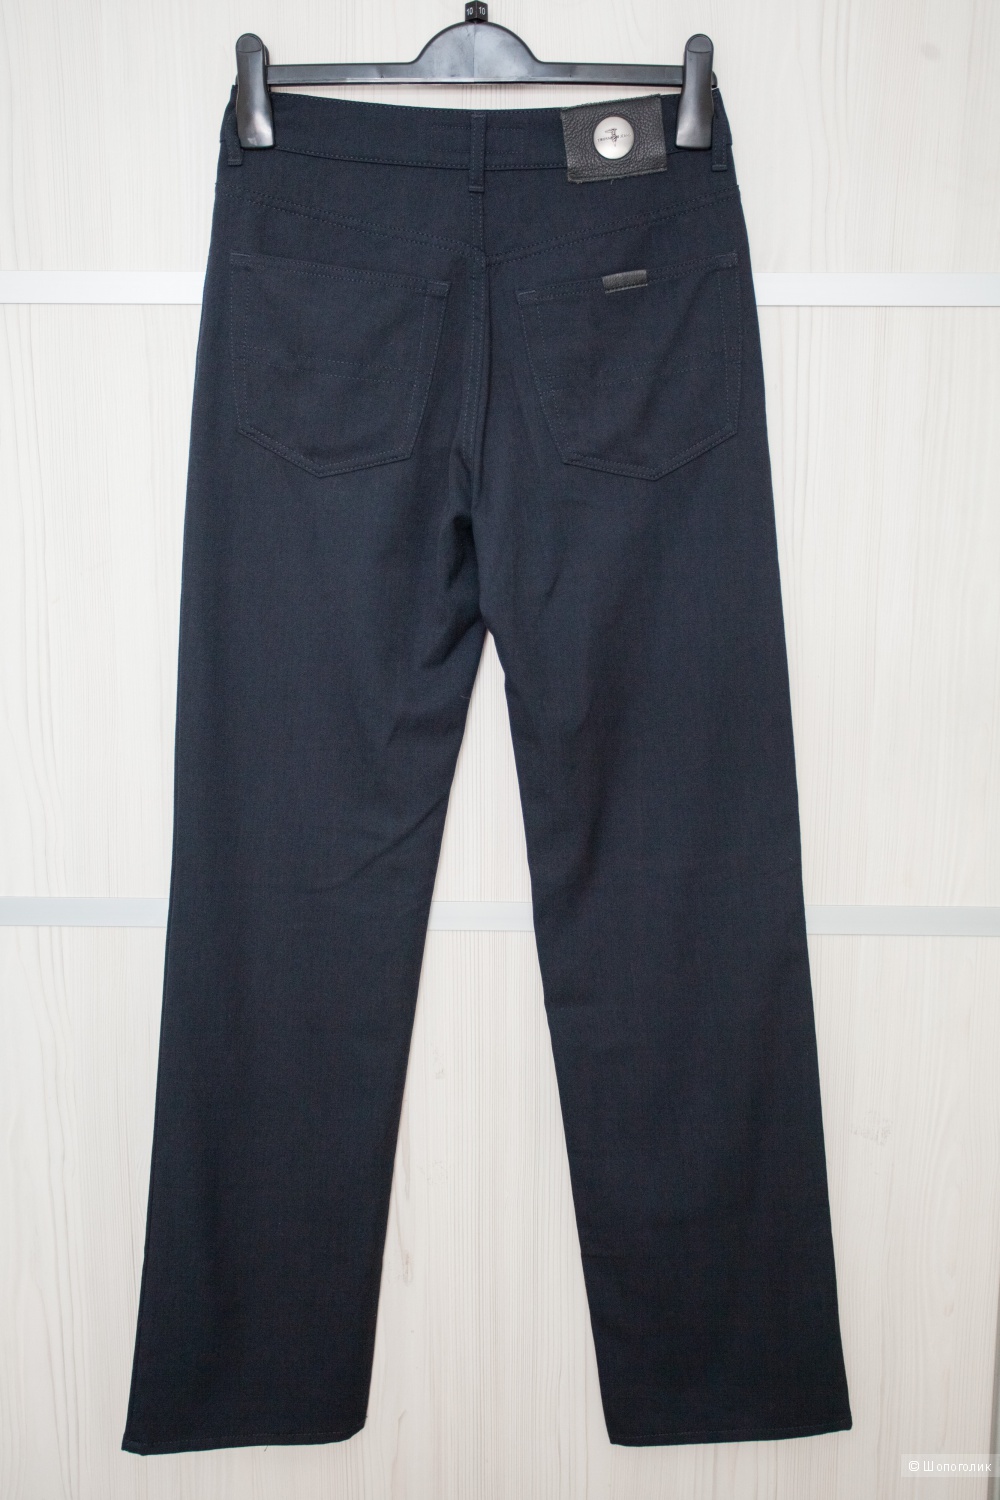 Джинсы Trussardi Jeans, 30 размер